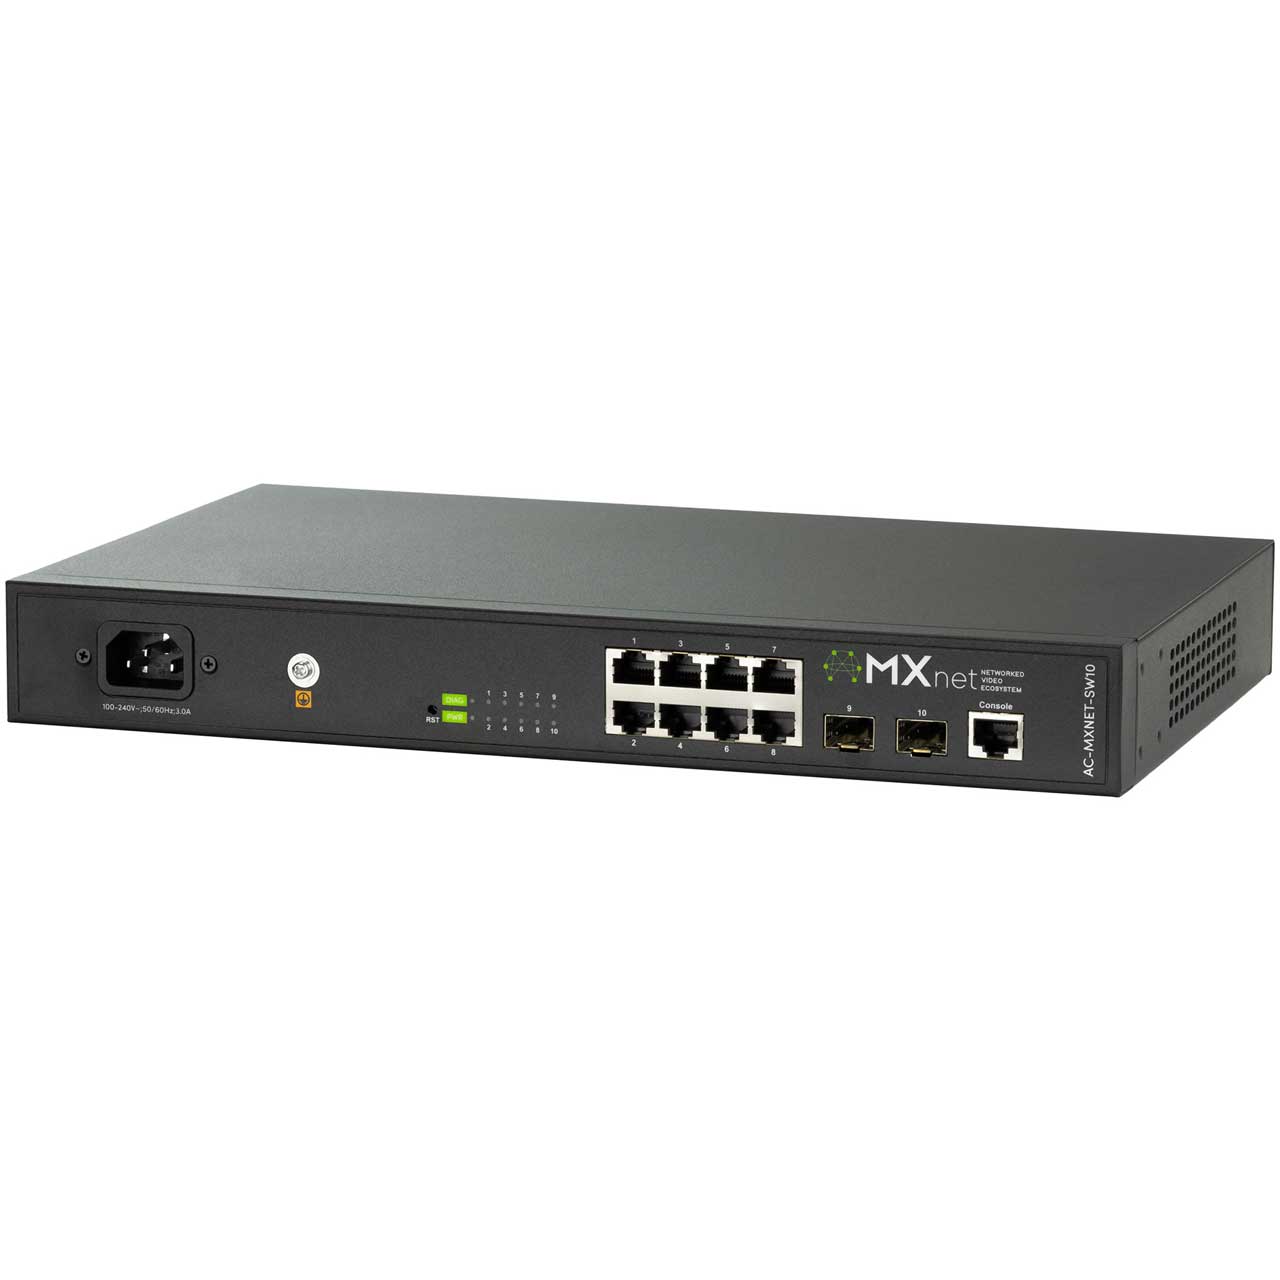 AVPro Edge AC-MXNET-SW10 10-Port RJ45 Switch (1G) with Intelligent AV Processing & 8 PoE ports AC-MXNET-SW10